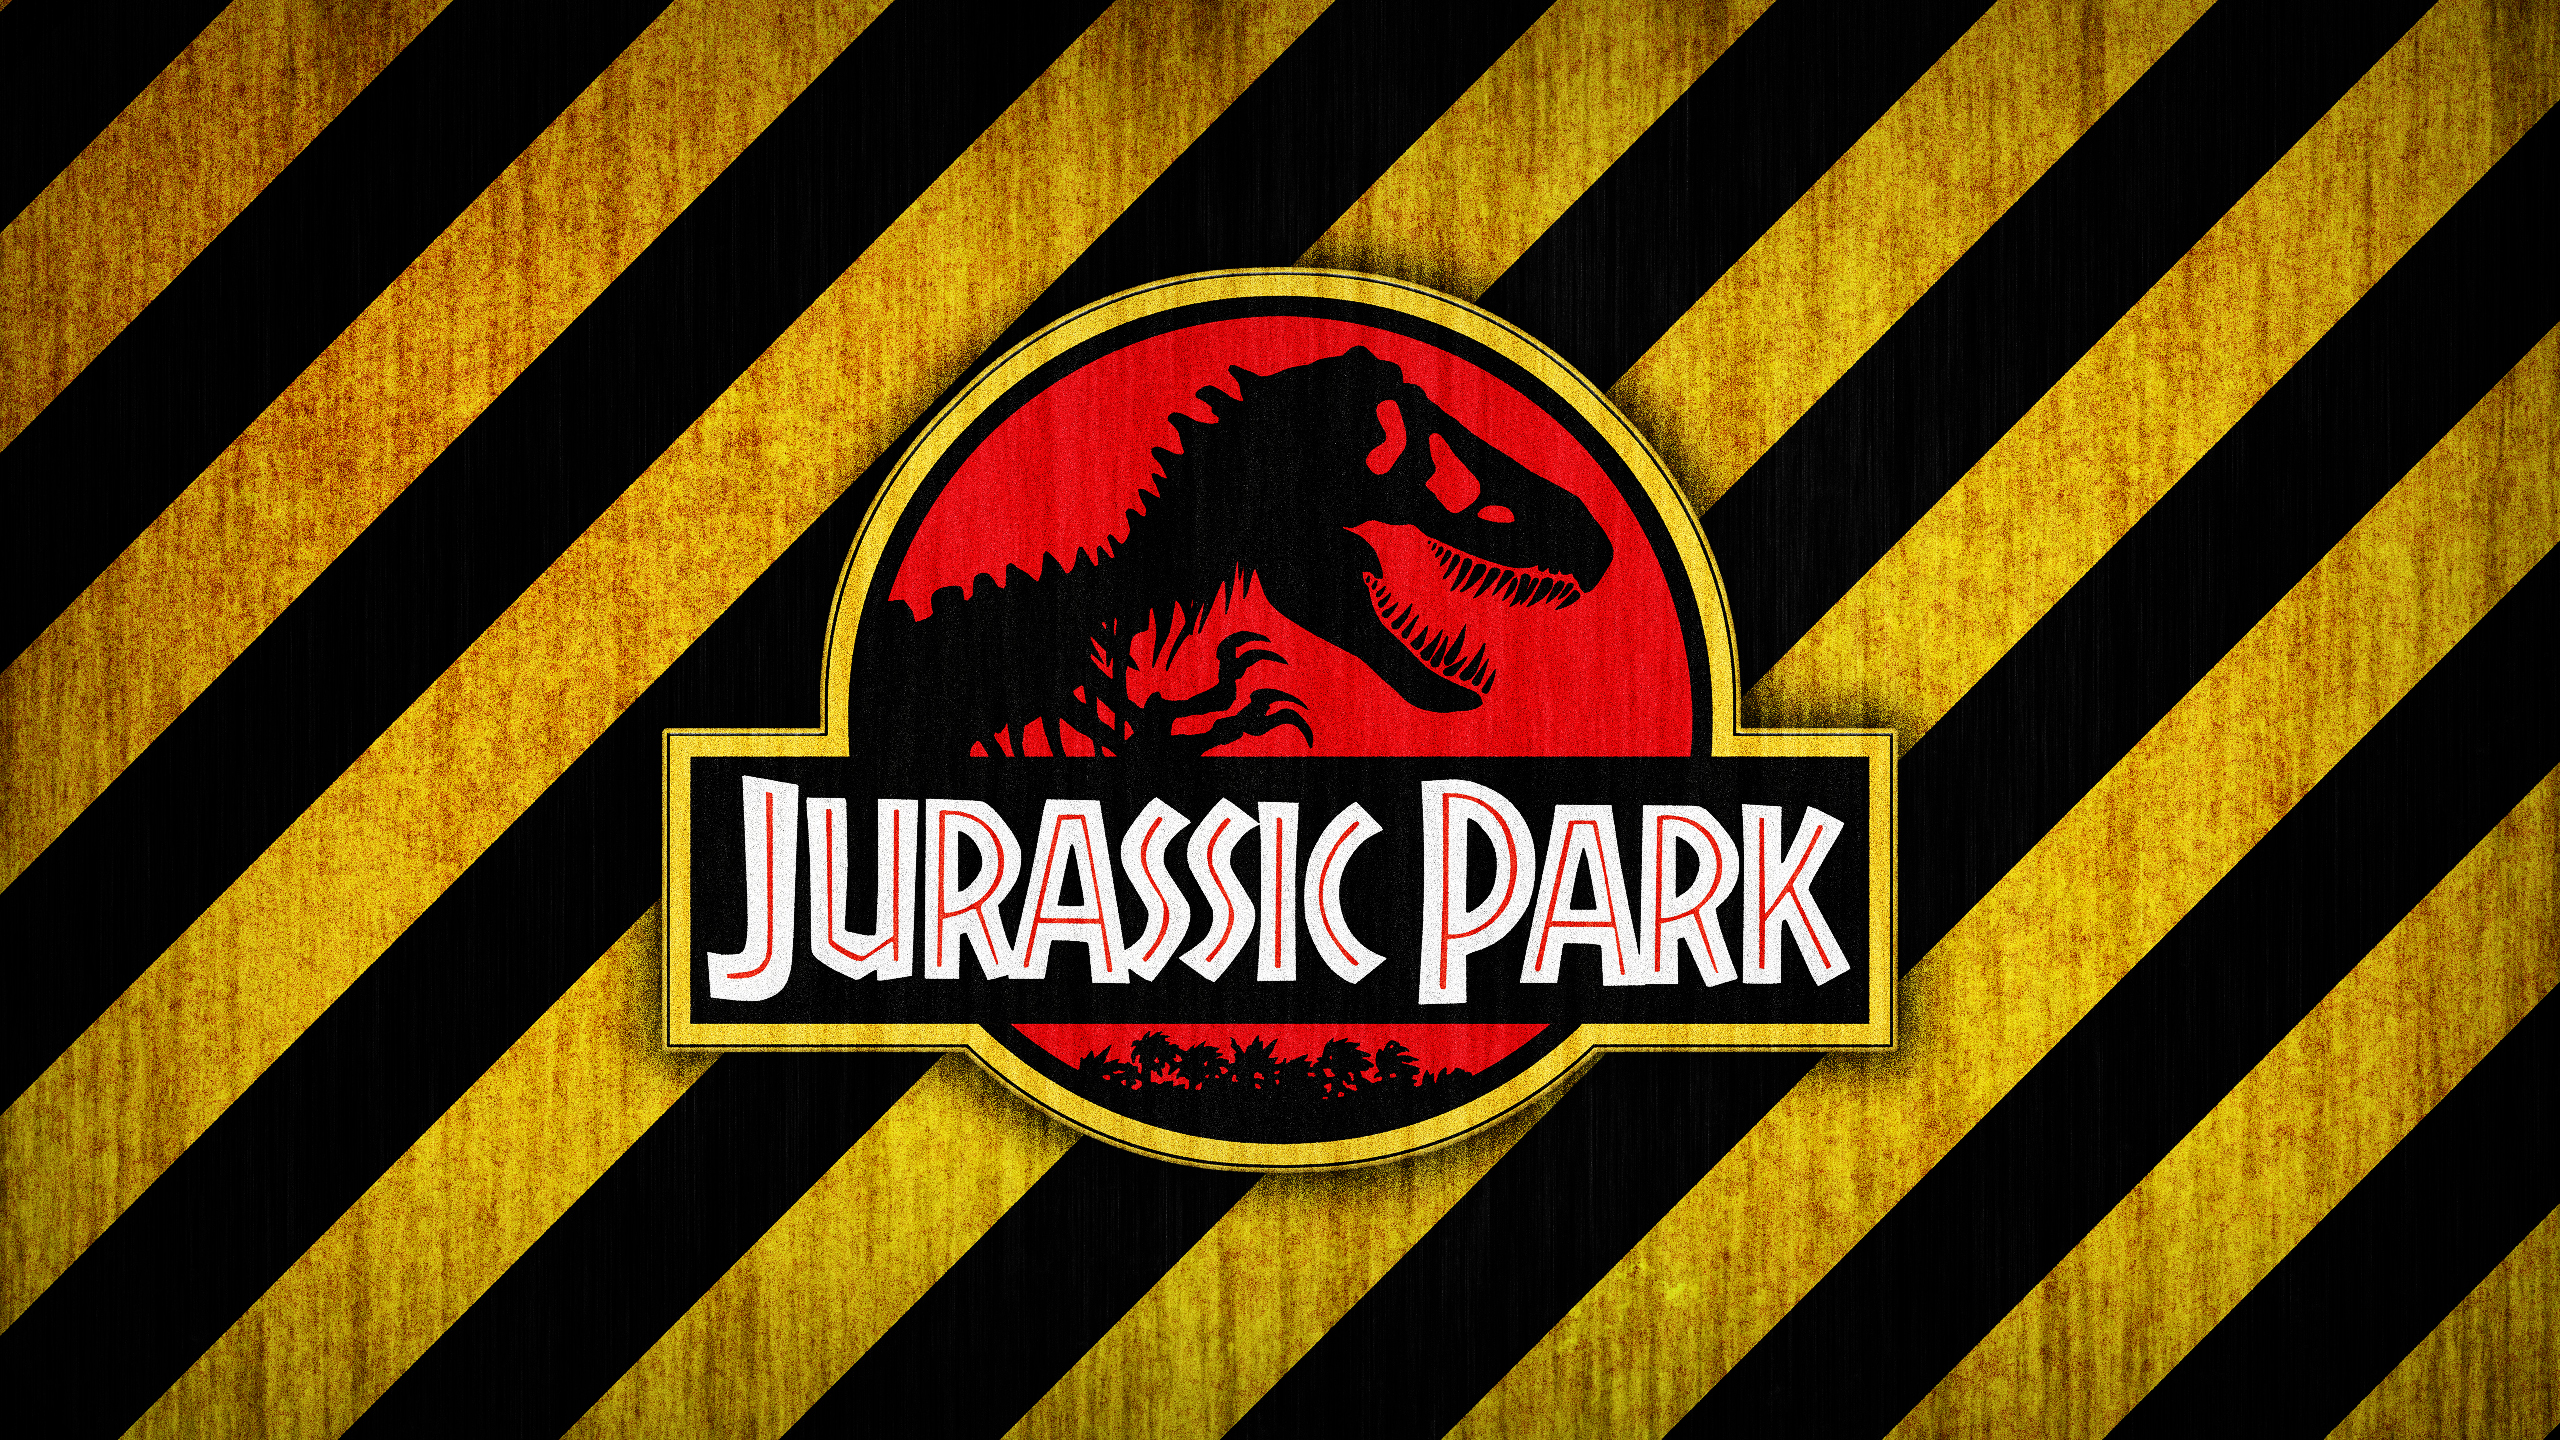 [44+] Jurassic Park Logo Wallpaper | WallpaperSafari.com